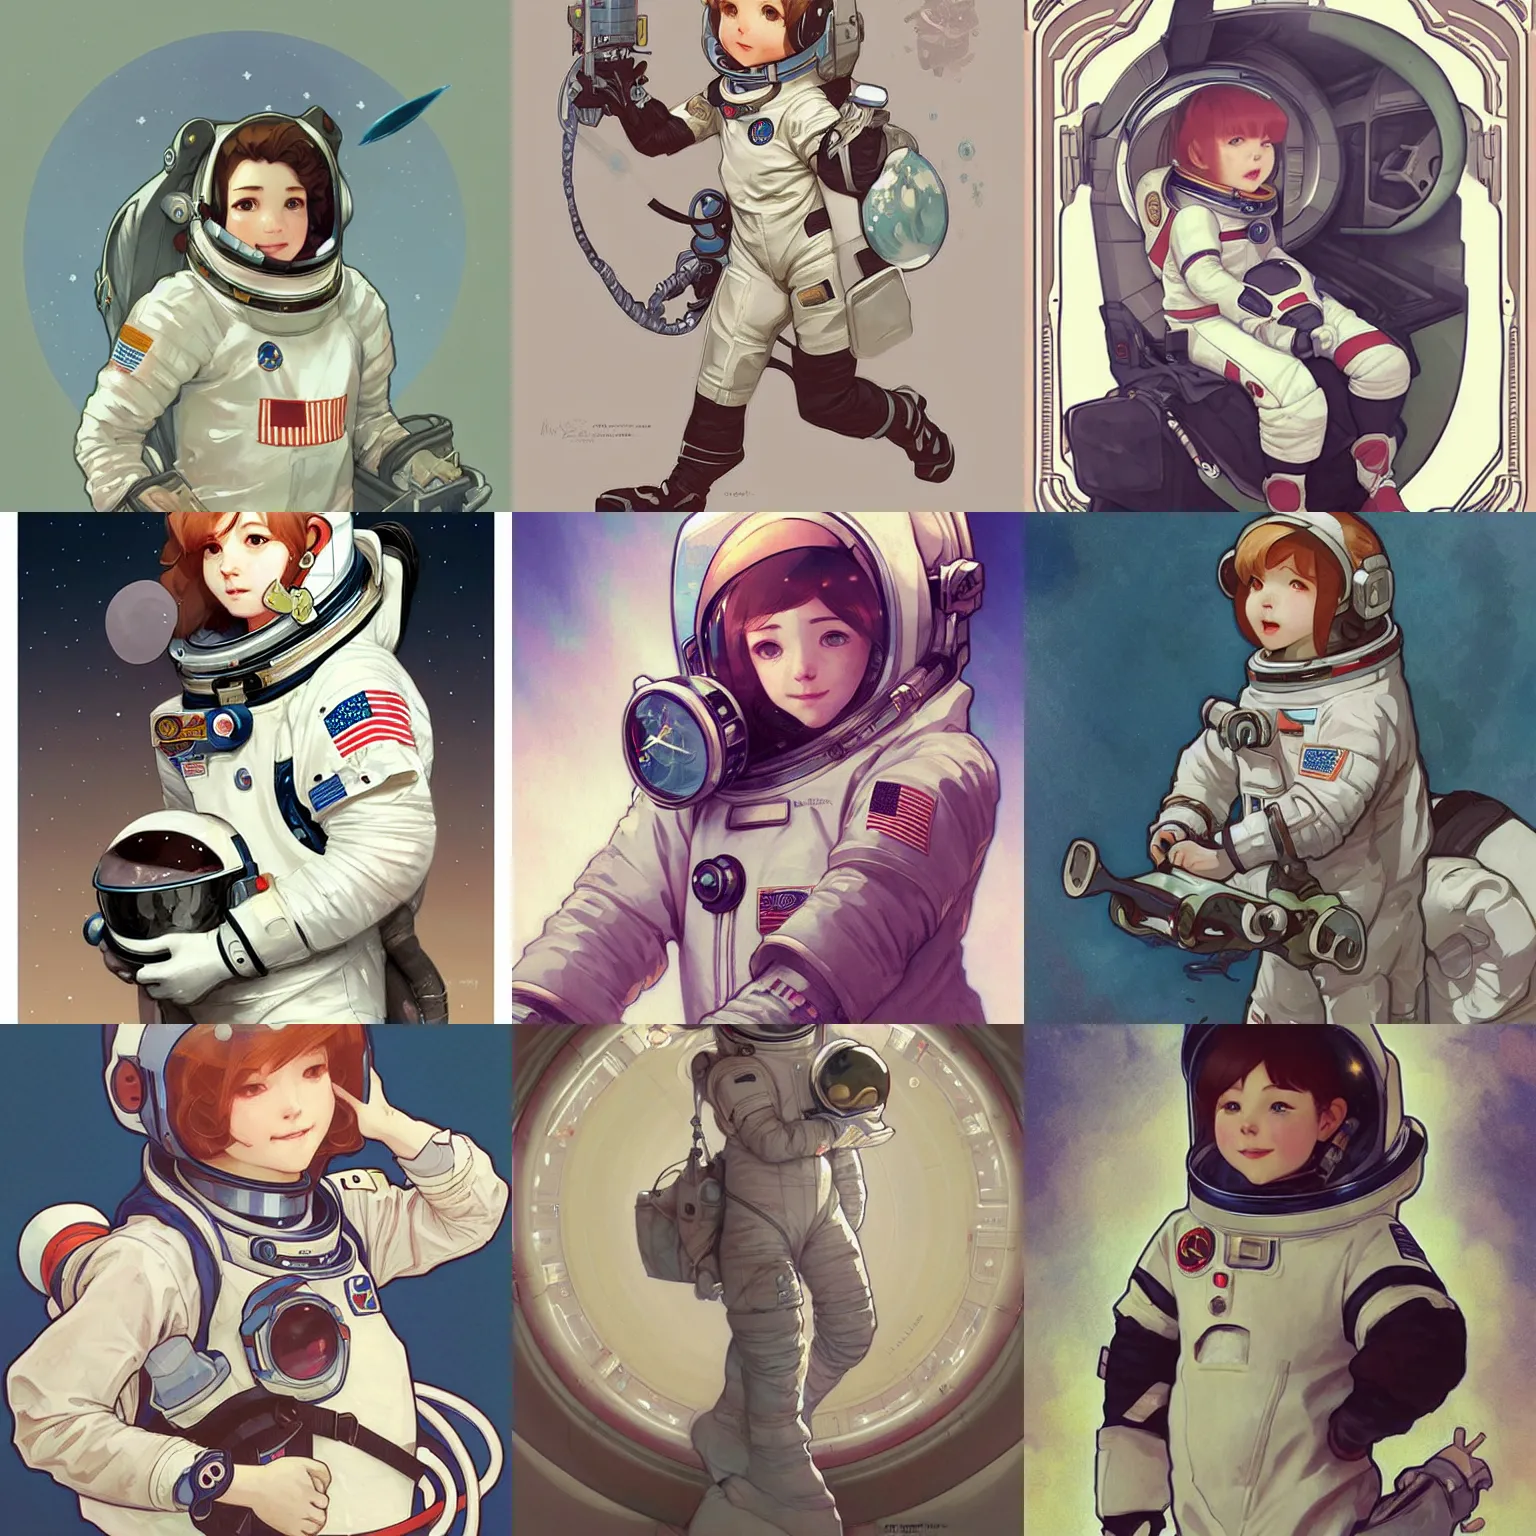 Prompt: an adorable astronaut by krenz cushart, artgerm, alphonse mucha, akihiko yoshida